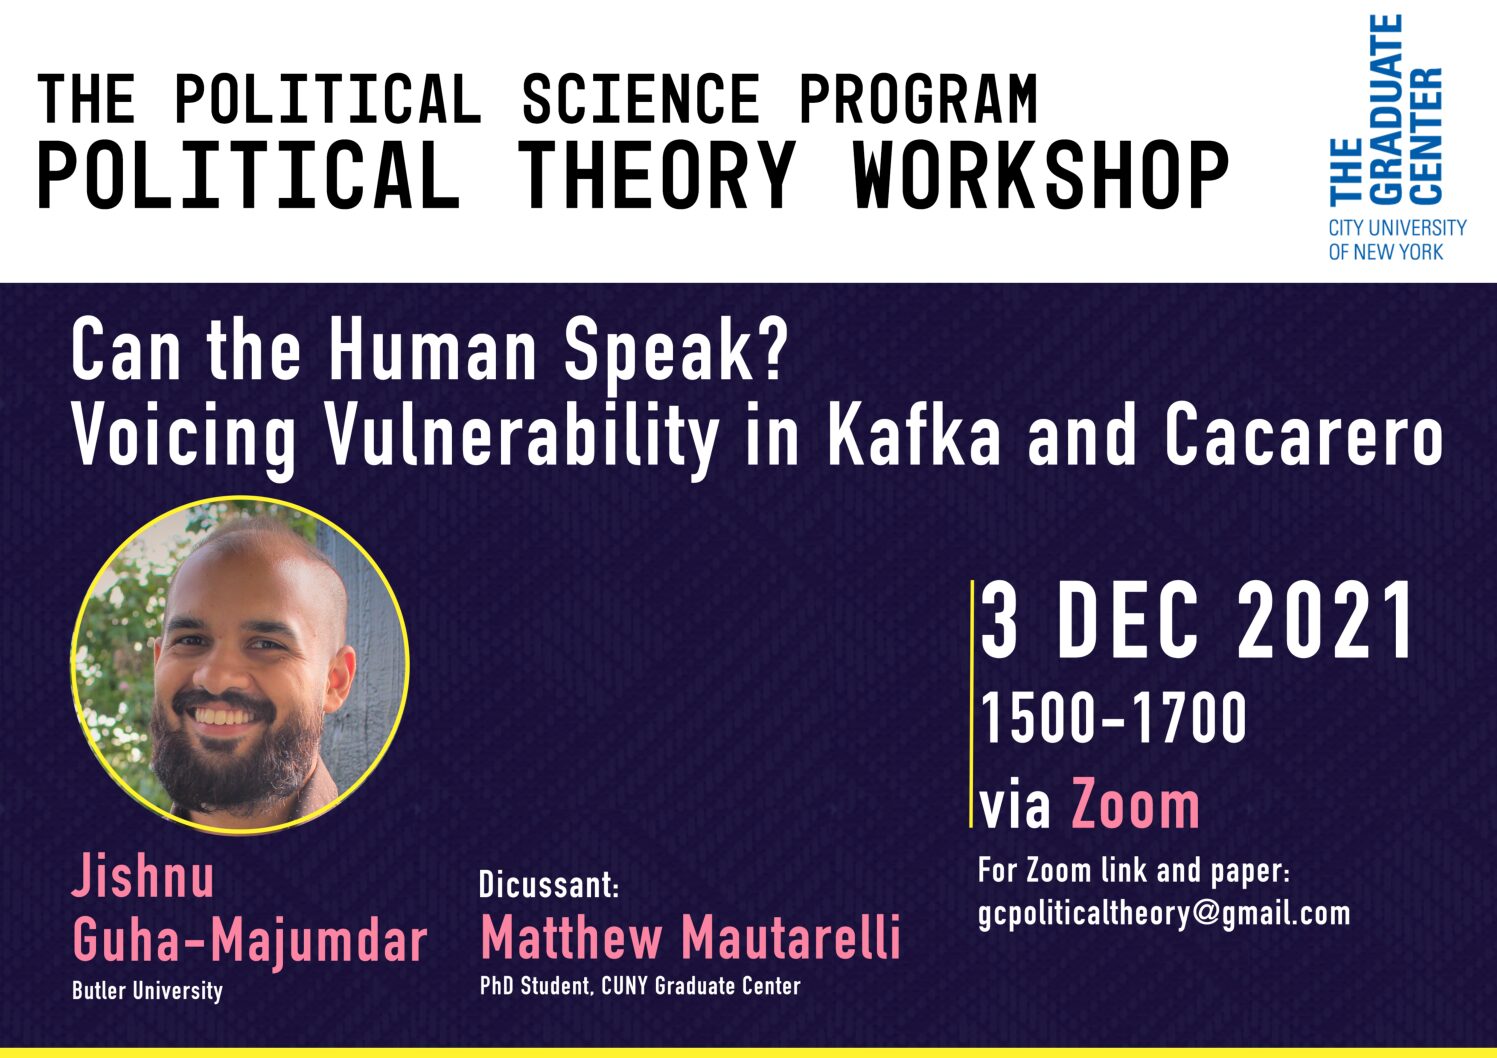 Political Theory Workshop: Jishnu Guha-Majumdar, "Can the Human Speak? Voicing Vulnerability in Kafka and Cacarero," Friday, December 3, 3:00-5:00PM